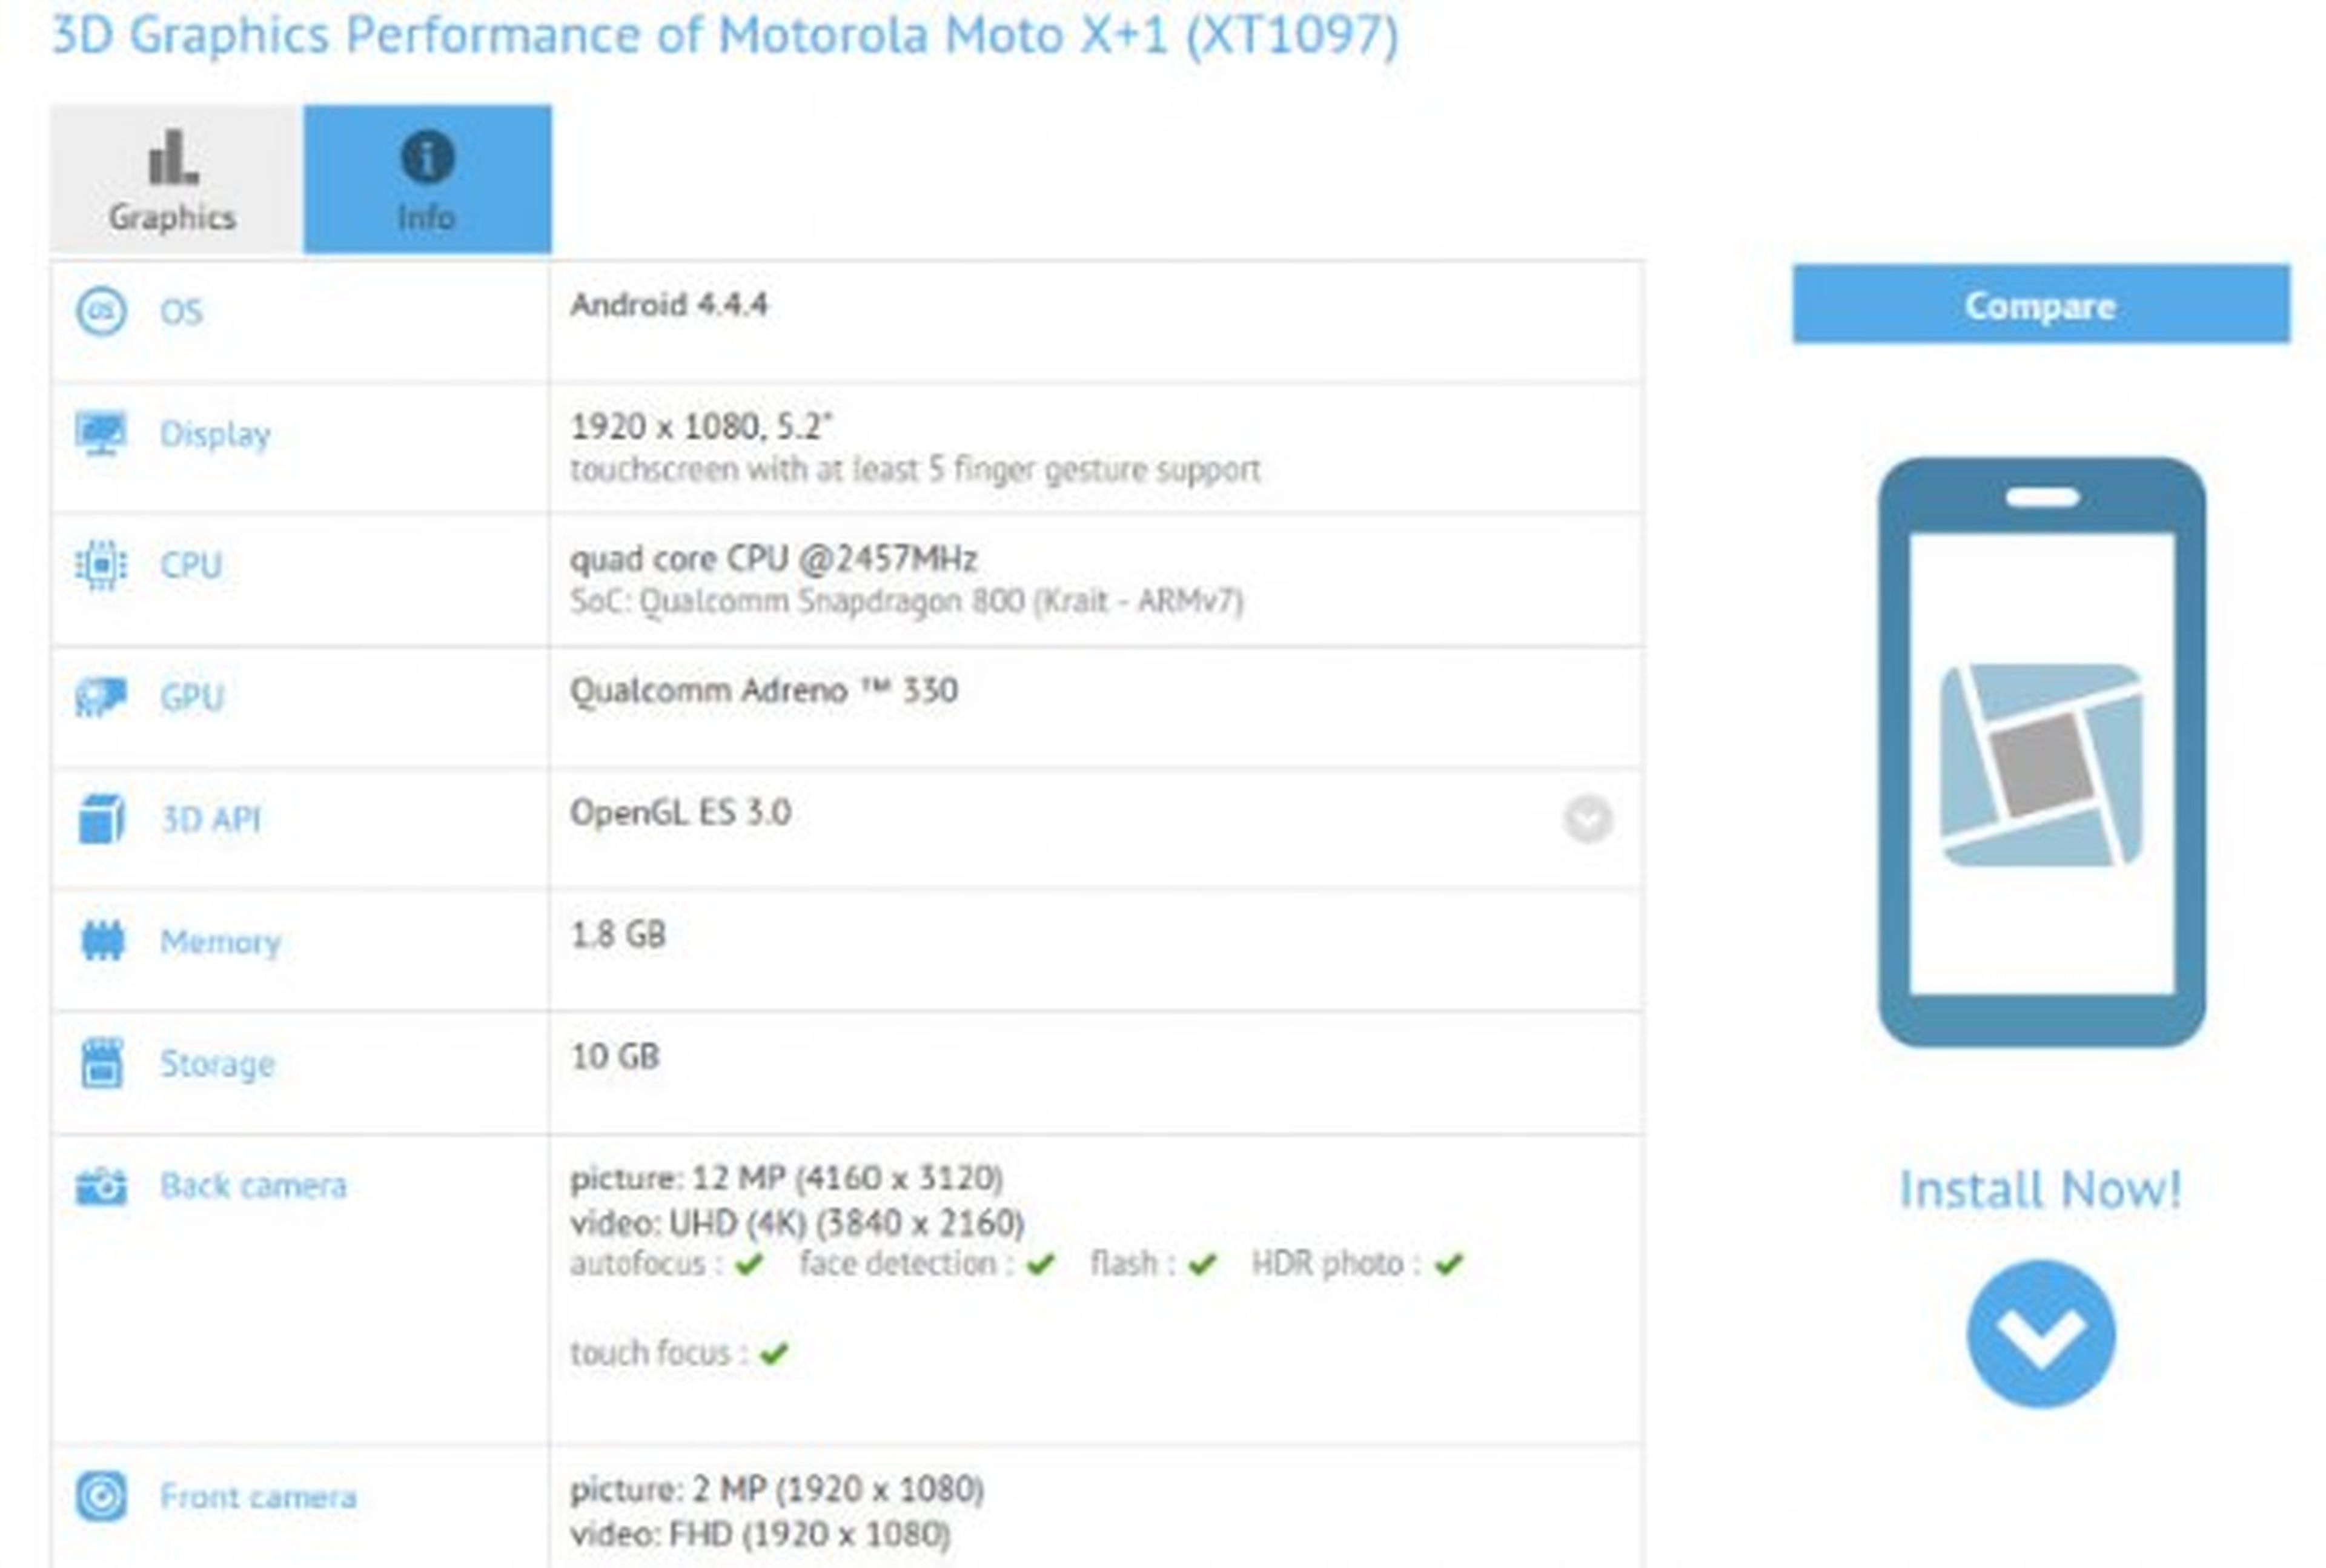 Moto X+1 benchmark